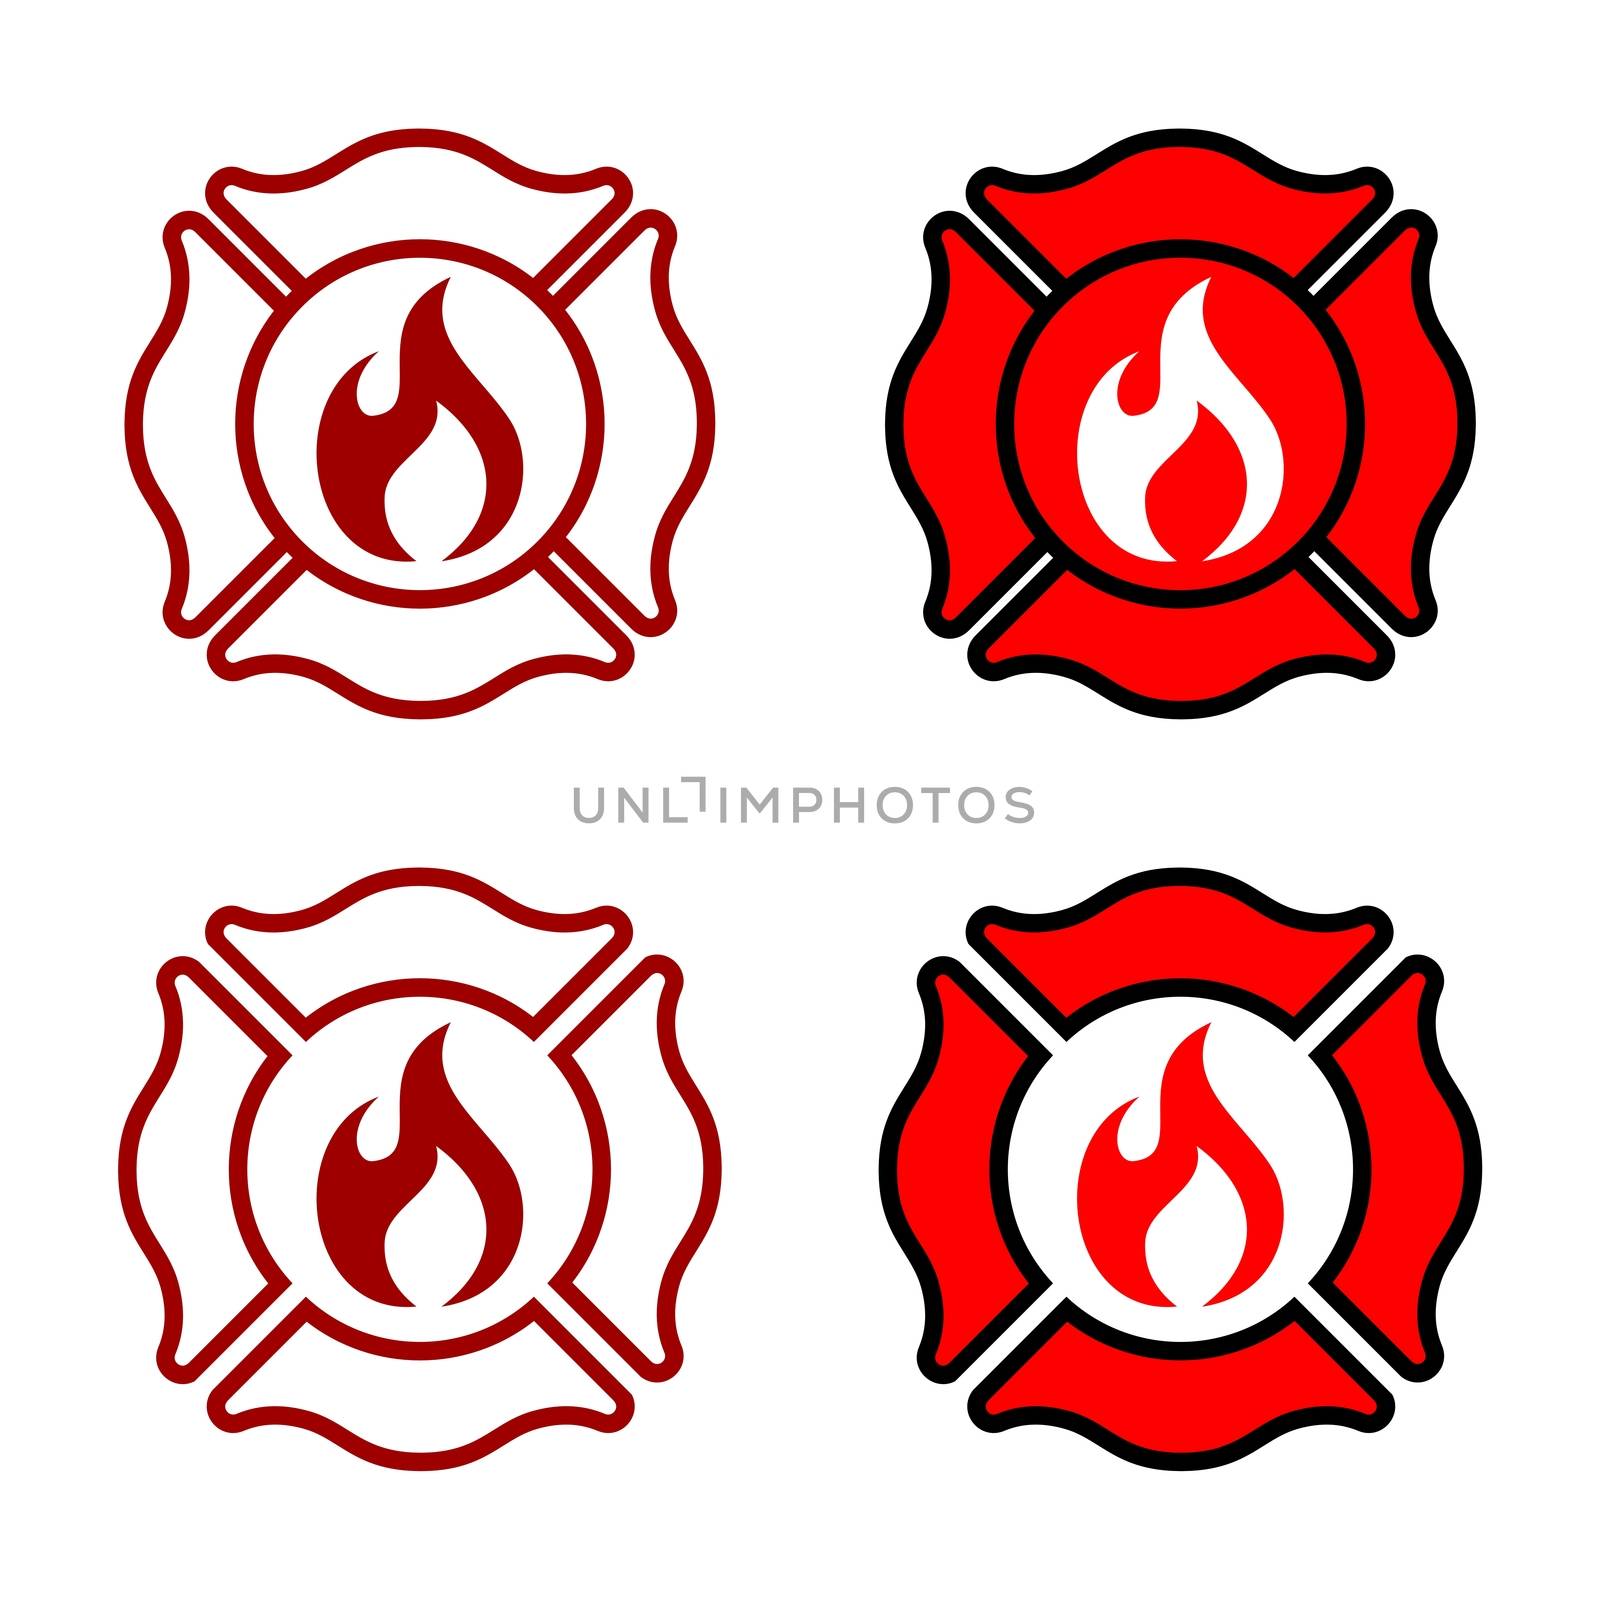 Fire Department Badge Logo Template Illustration Design. Vector EPS 10.